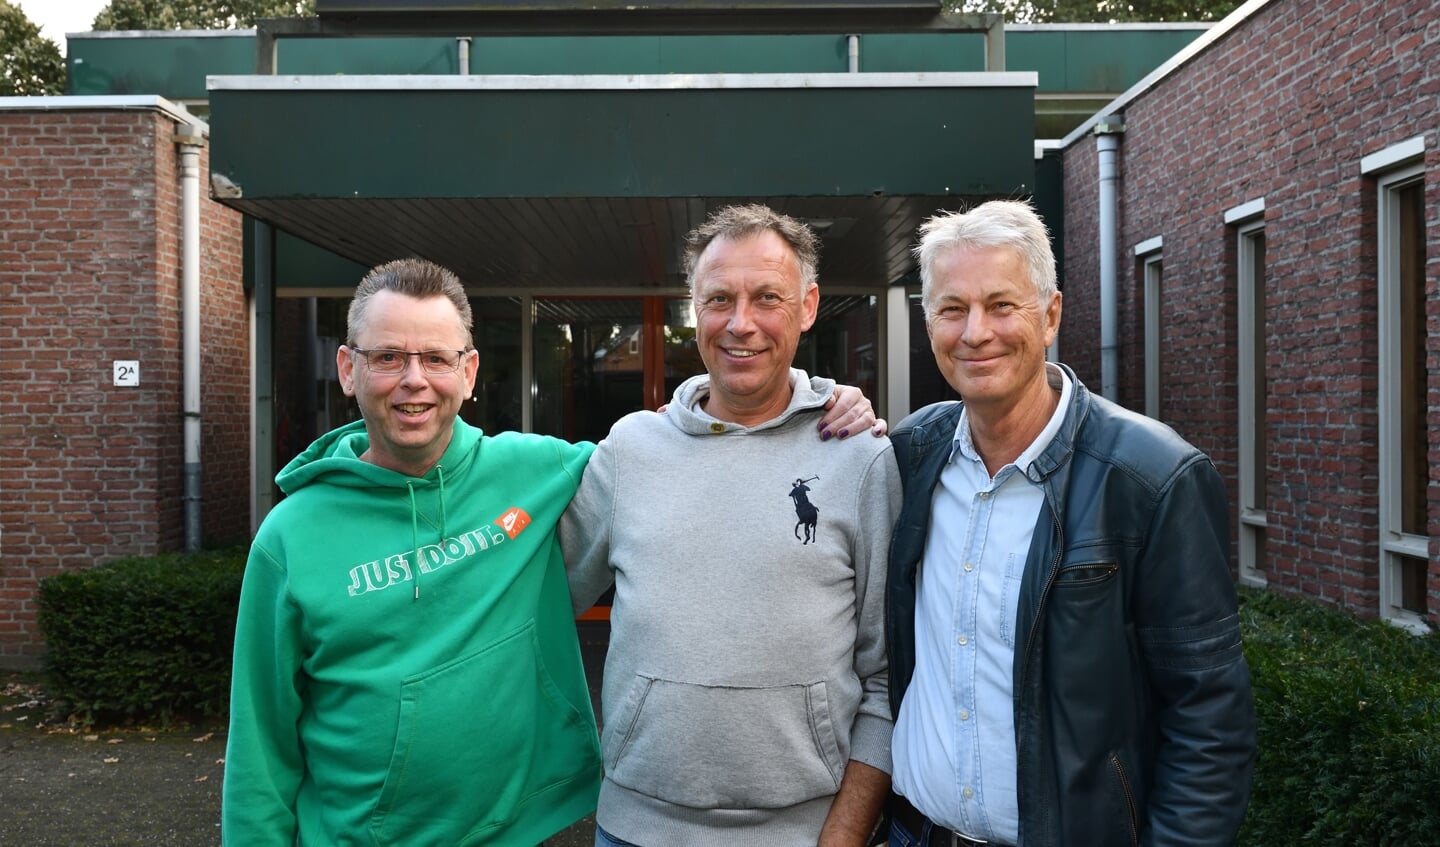 V.l.n.r.: dj Bernie Bakker, Marthony Gevers en Jürgen Feuerriegel